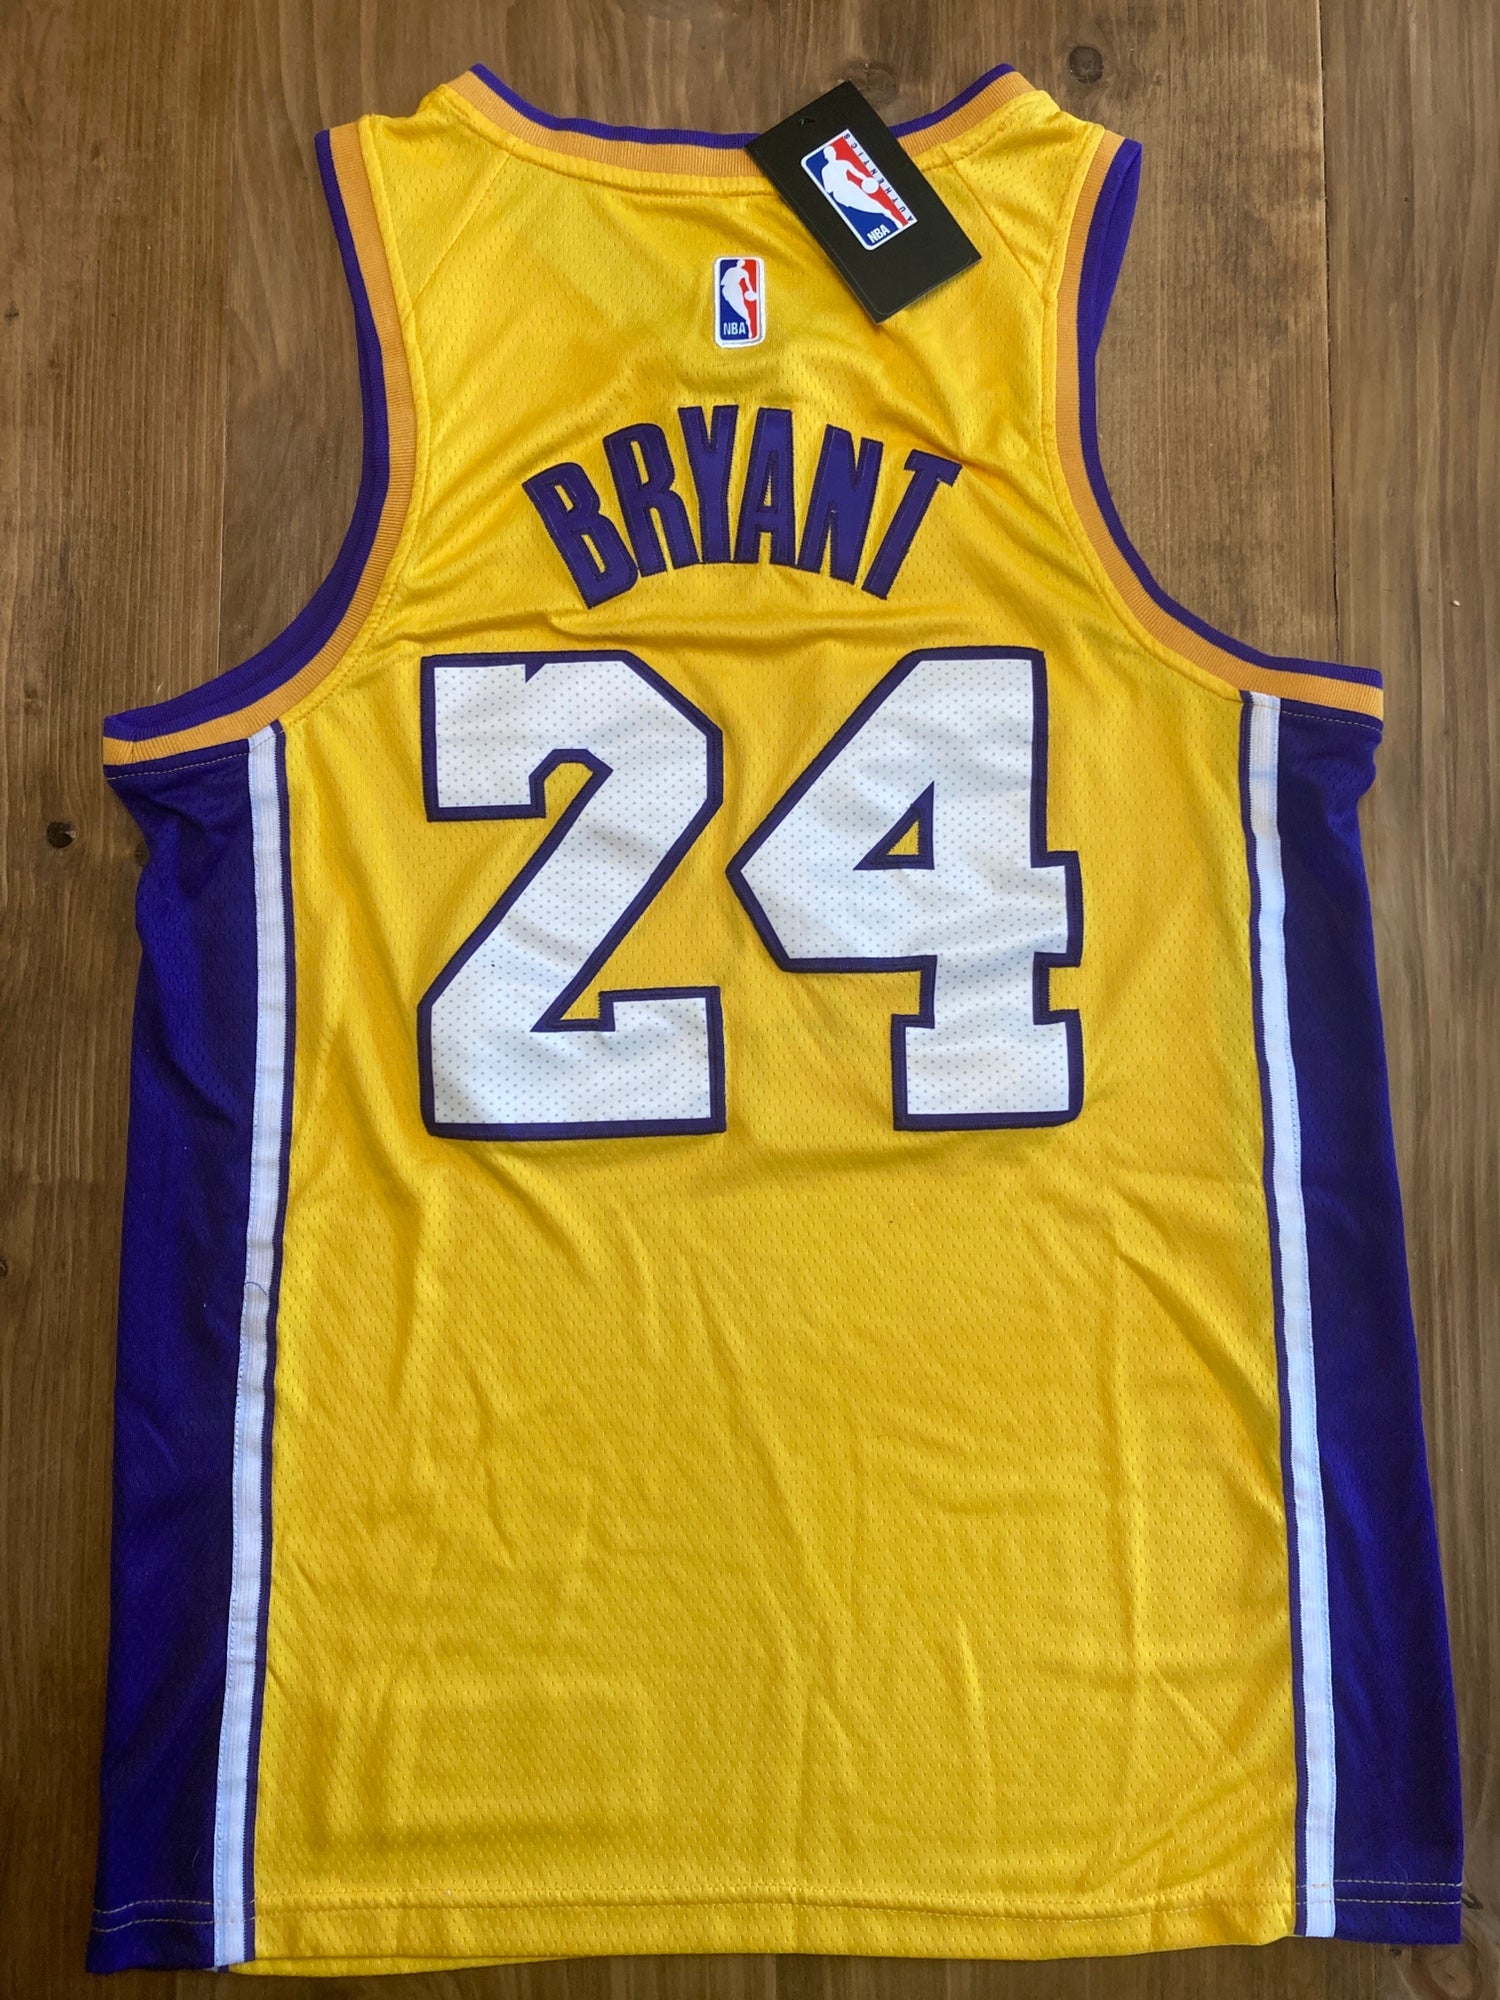 Nike Kobe Bryant #24 Jersey